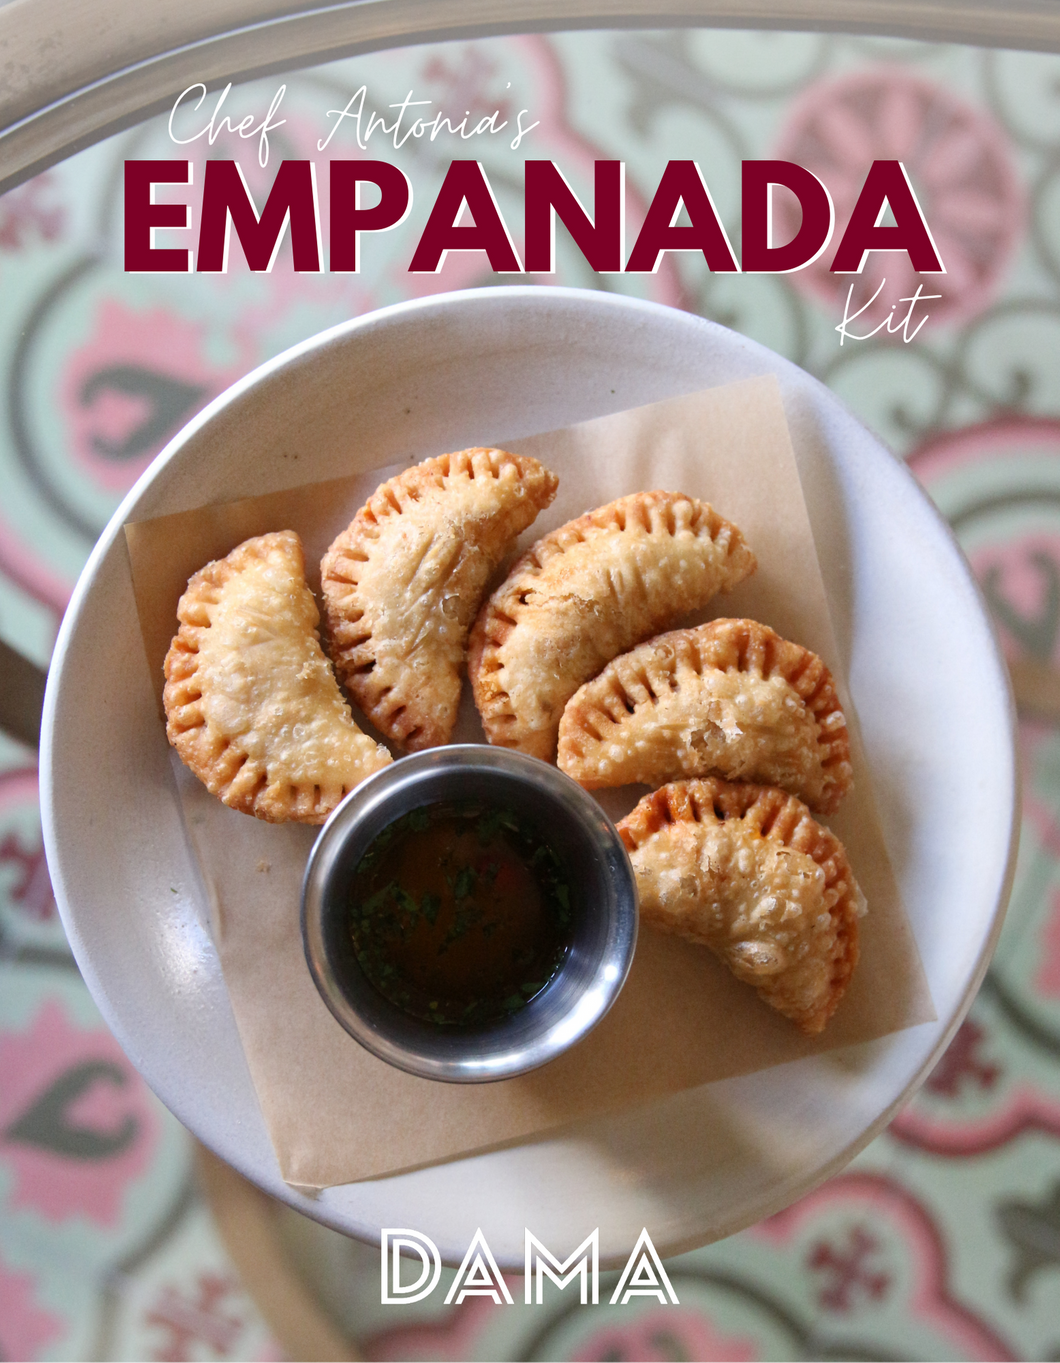 Interactive Virtual Empanada Kit